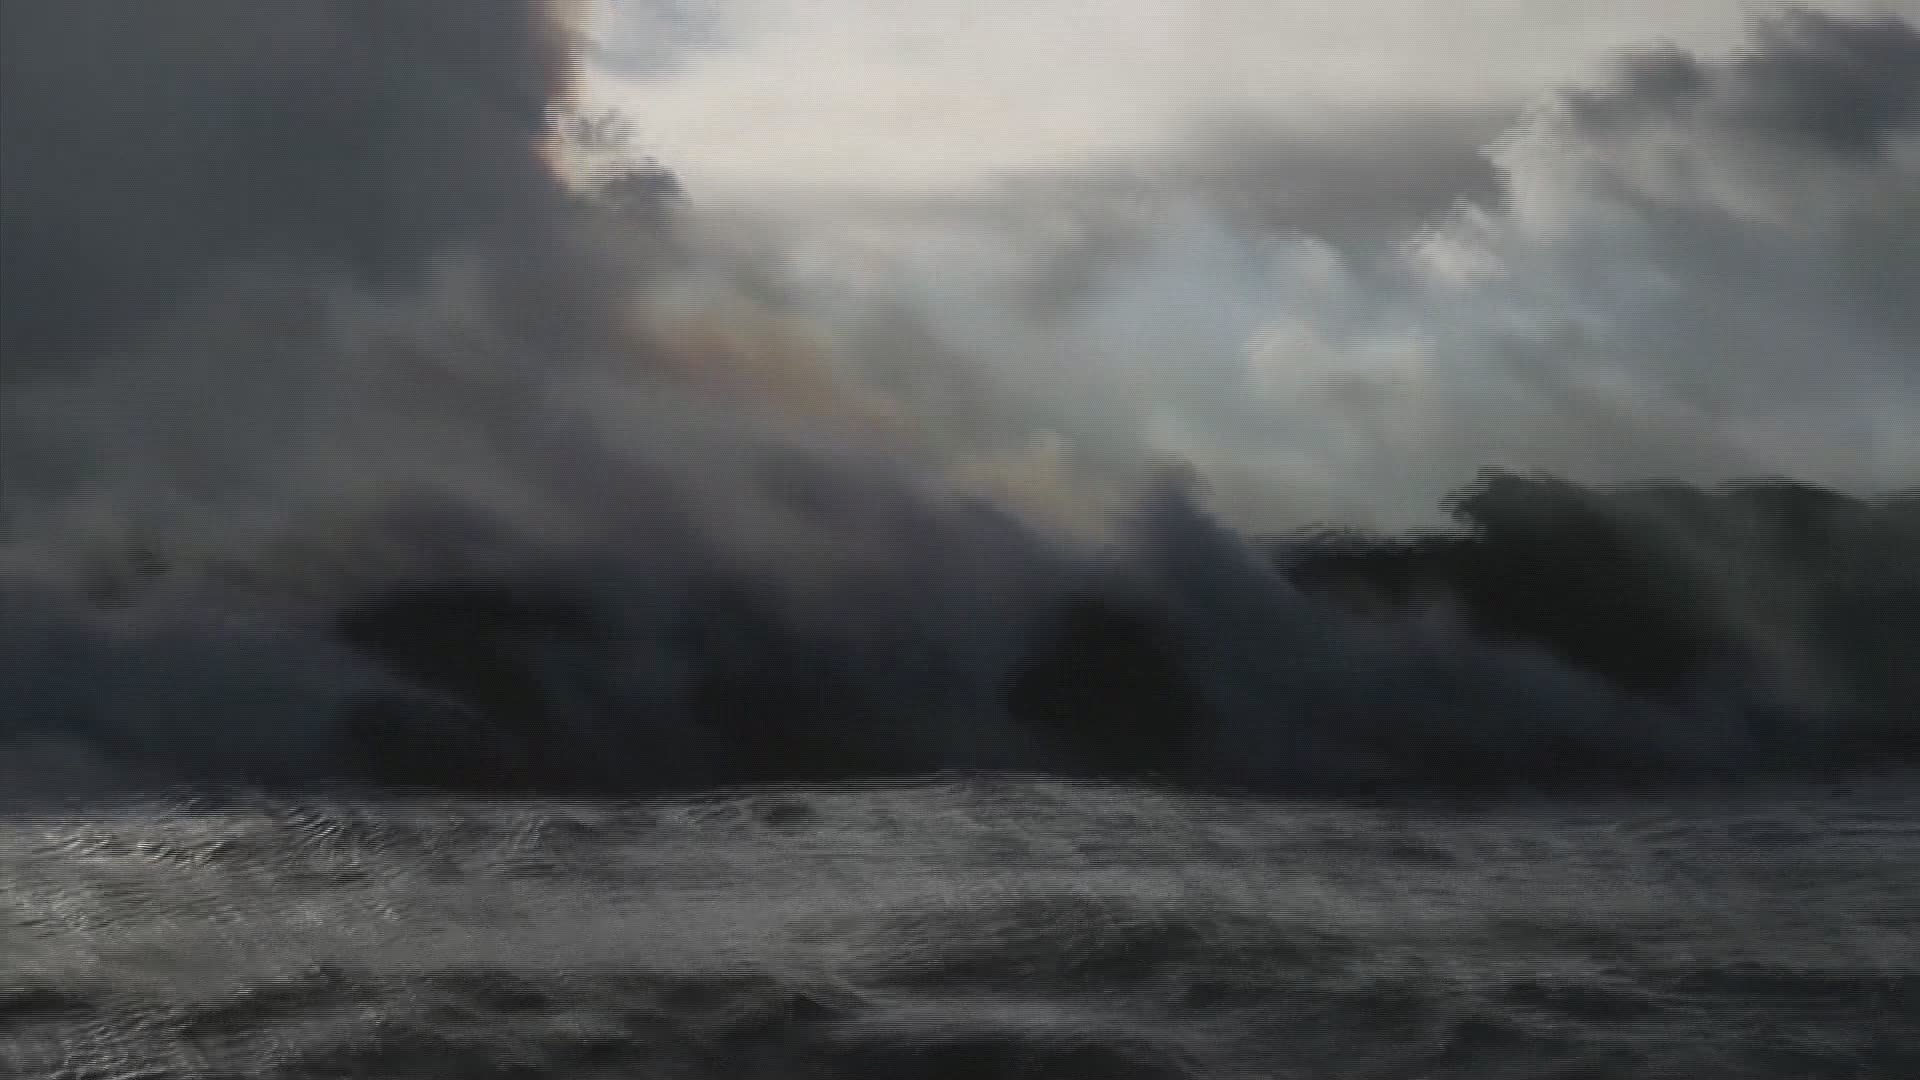 Toxic Laze From Hawaii Volcano Seen From Boat